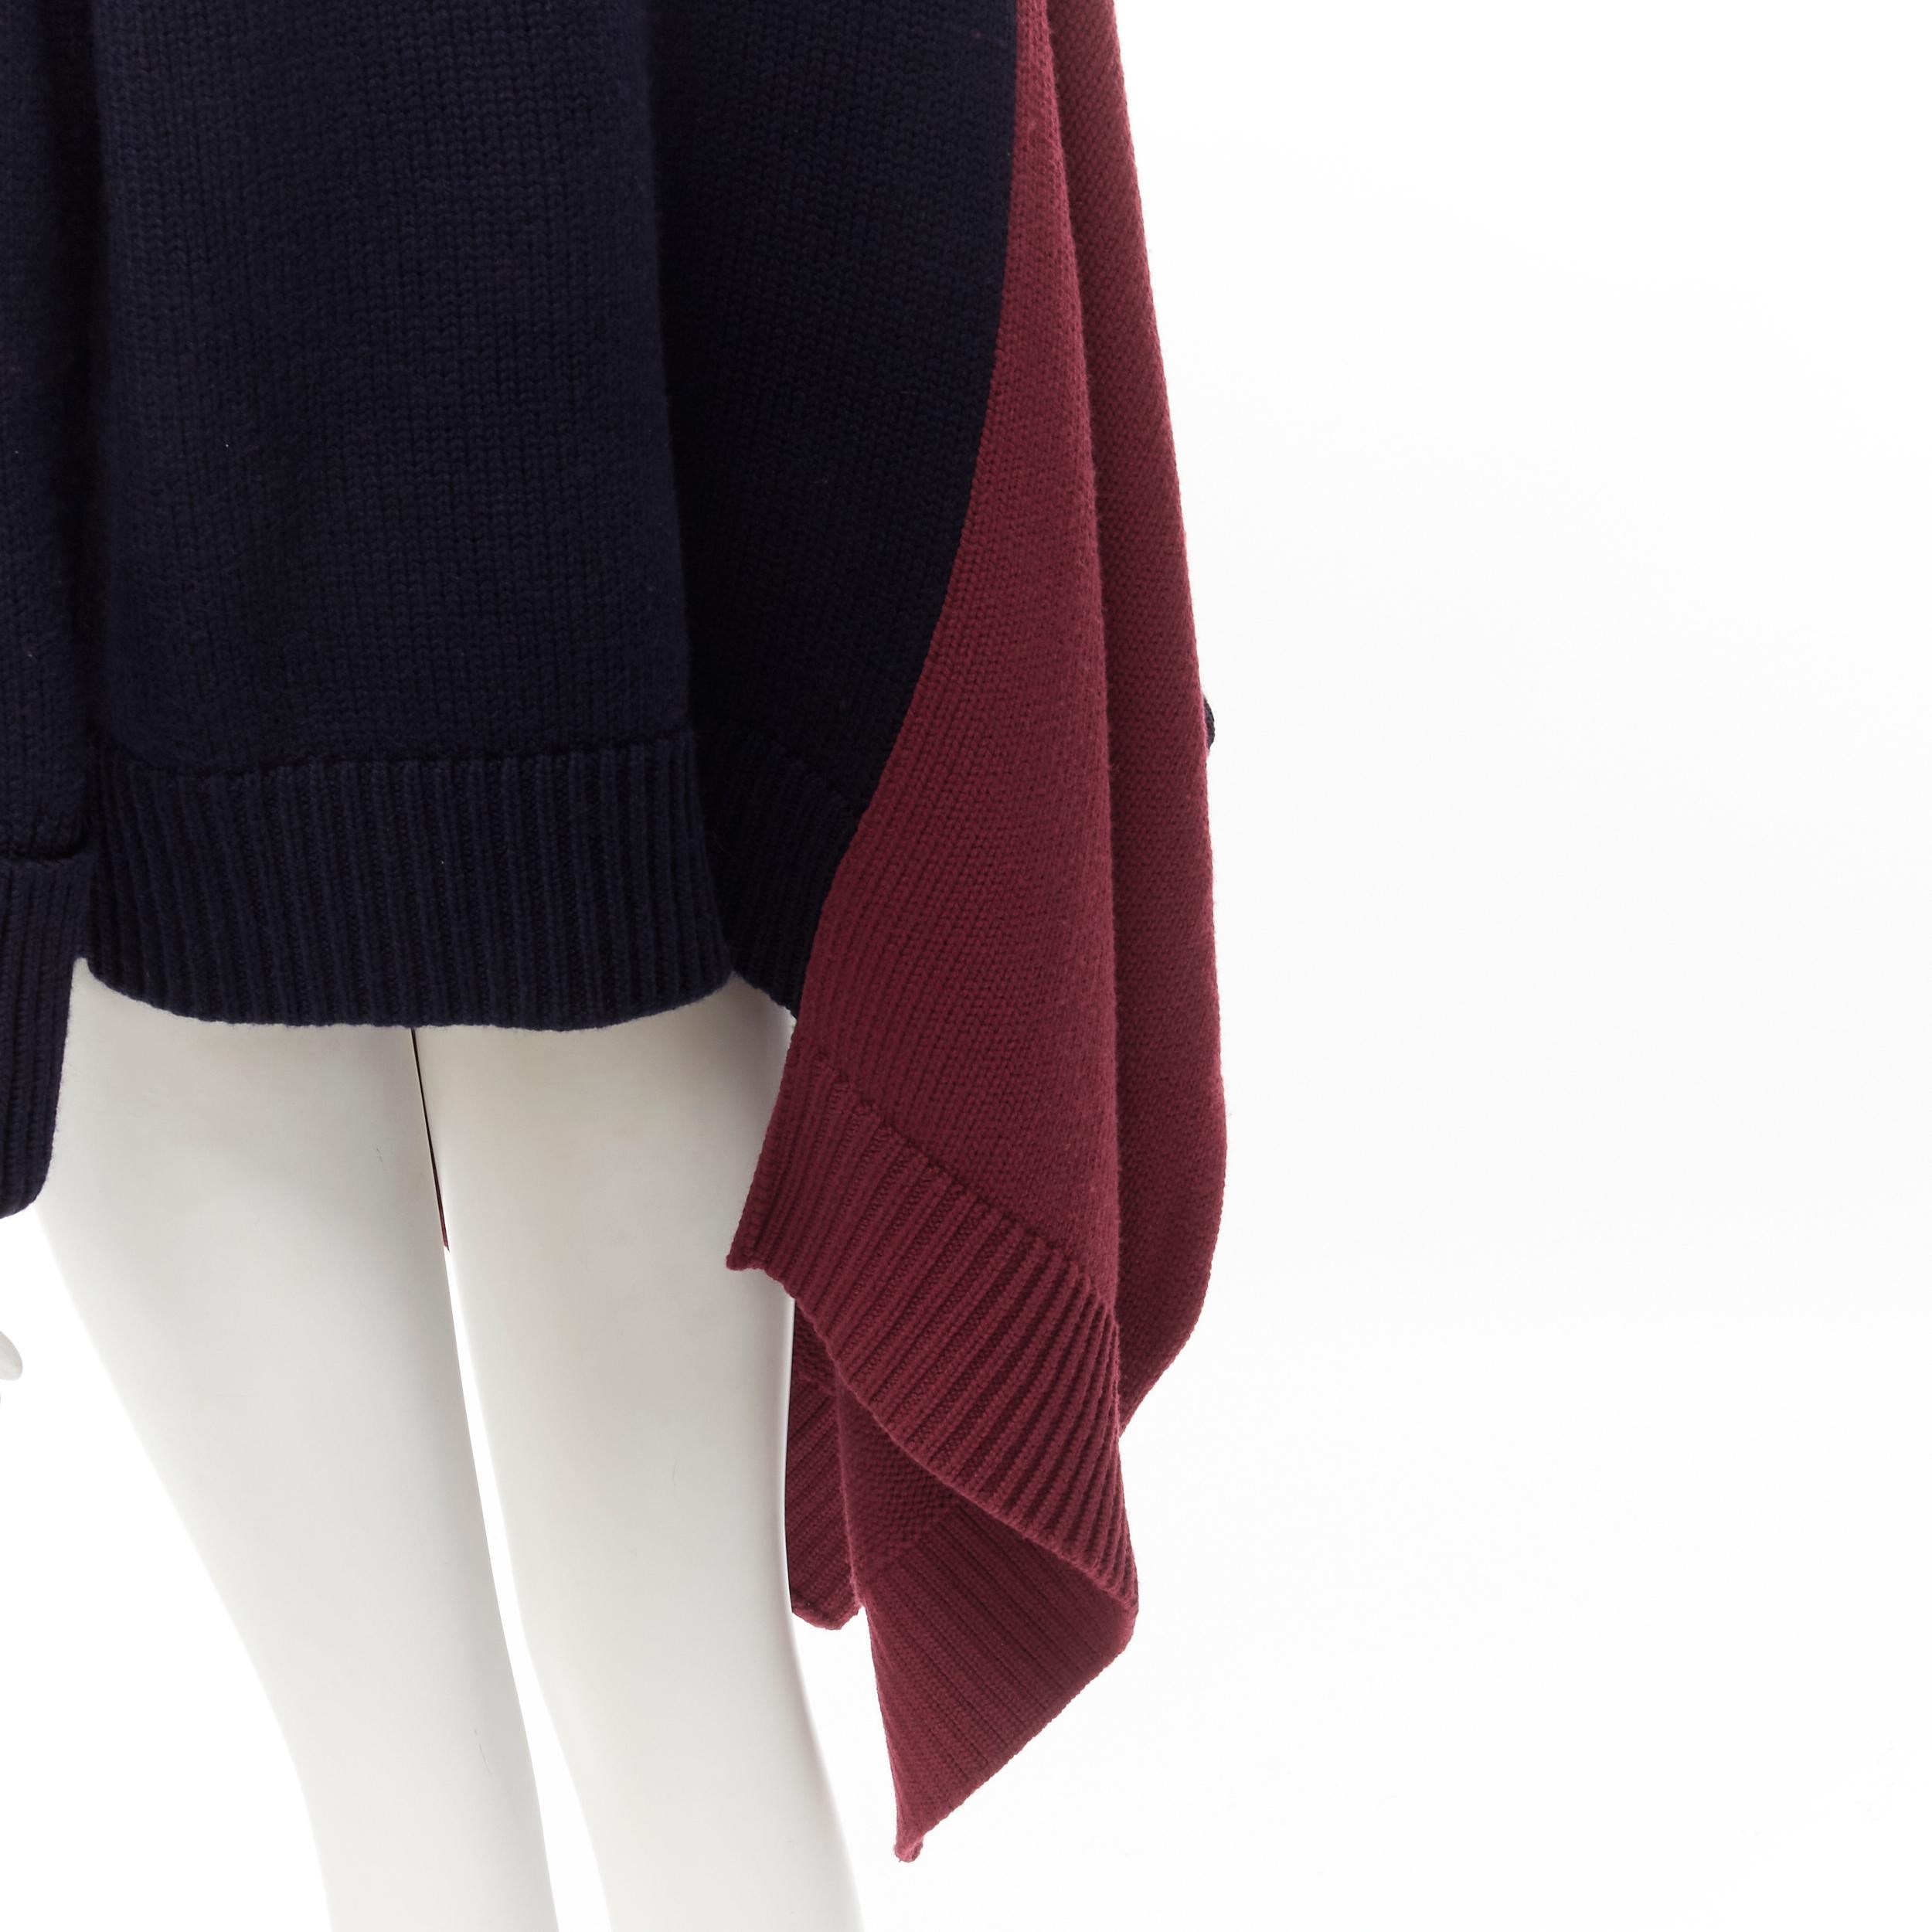 new MONSE 100% extra fine merino wool navy burgundy bias sweater cape pocho XS 3